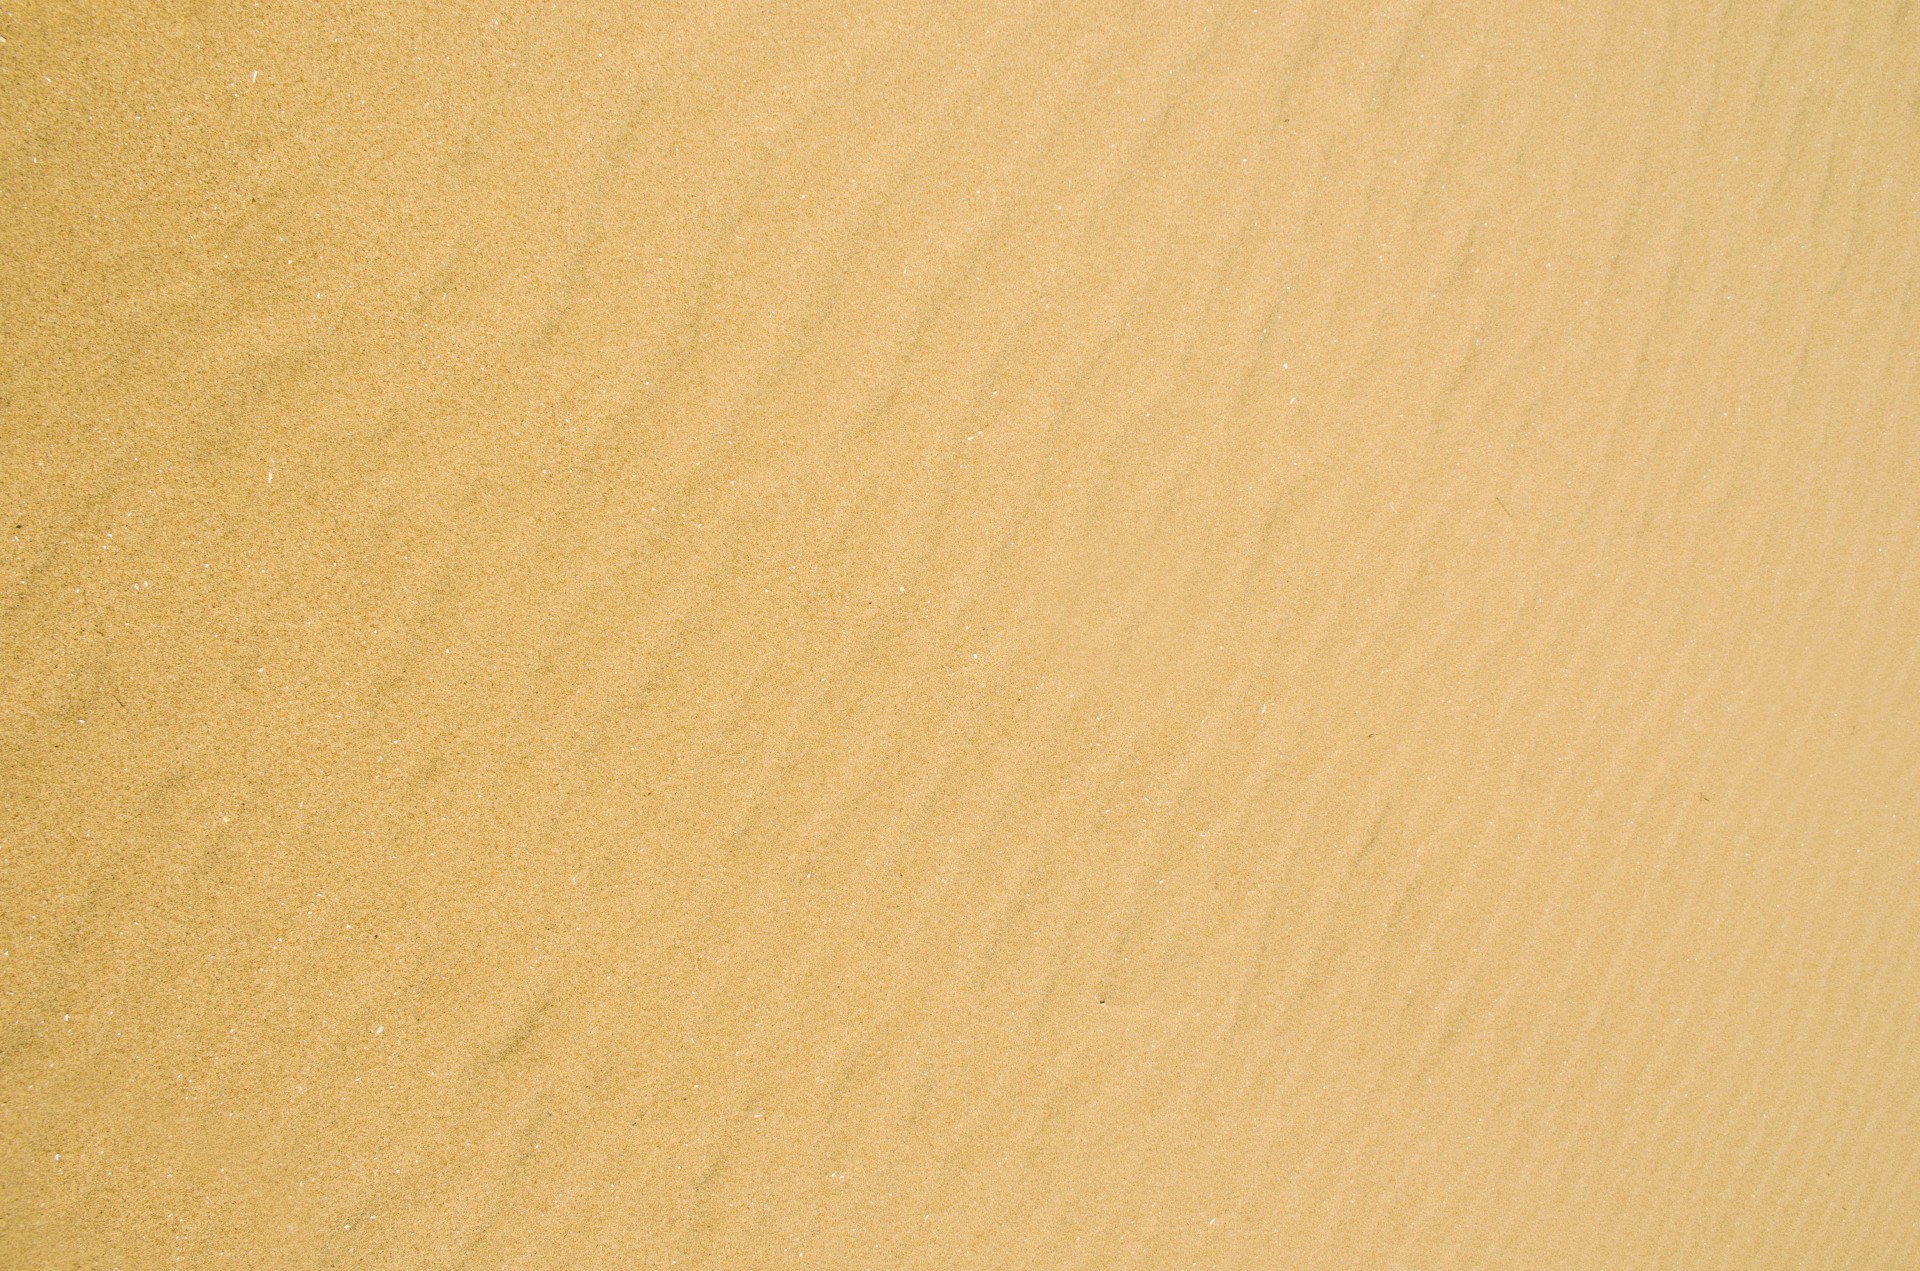 sand pattern background free photo